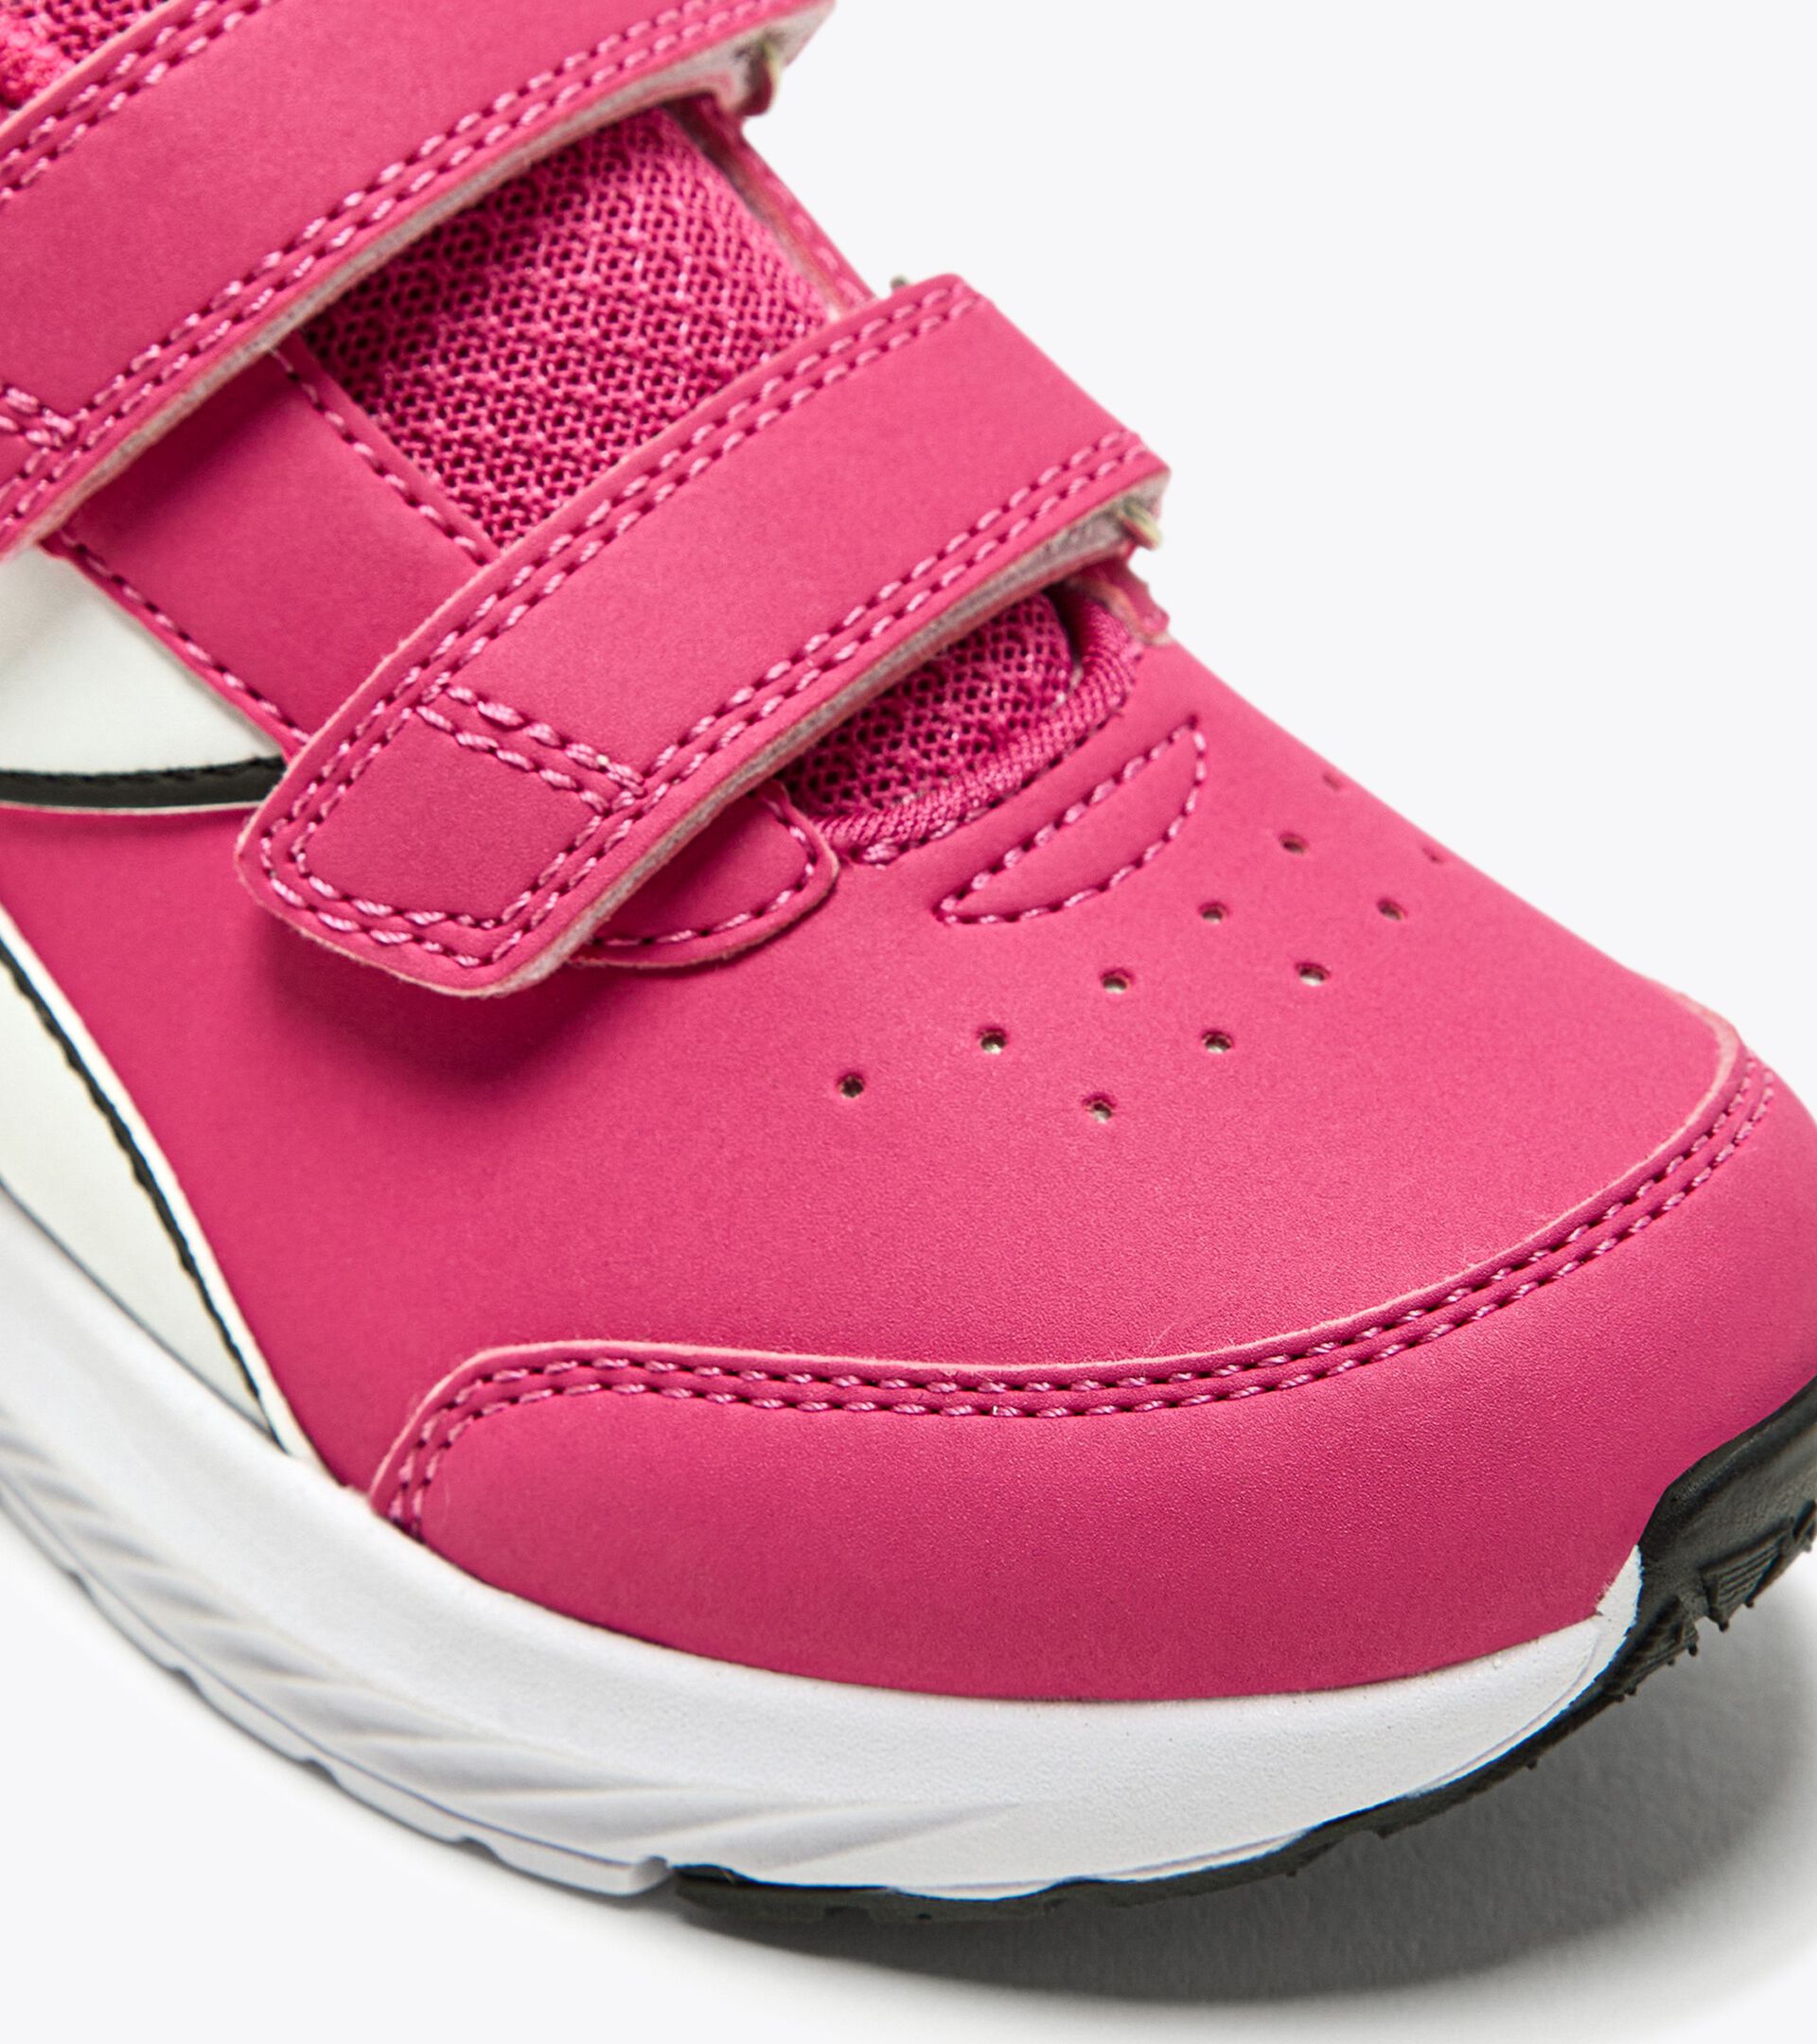 Sports shoe fod kids - 4 to 8 years - Gender Neutral FALCON 3 SL JR V FUCSHIA PURPLE/WHITE - Diadora